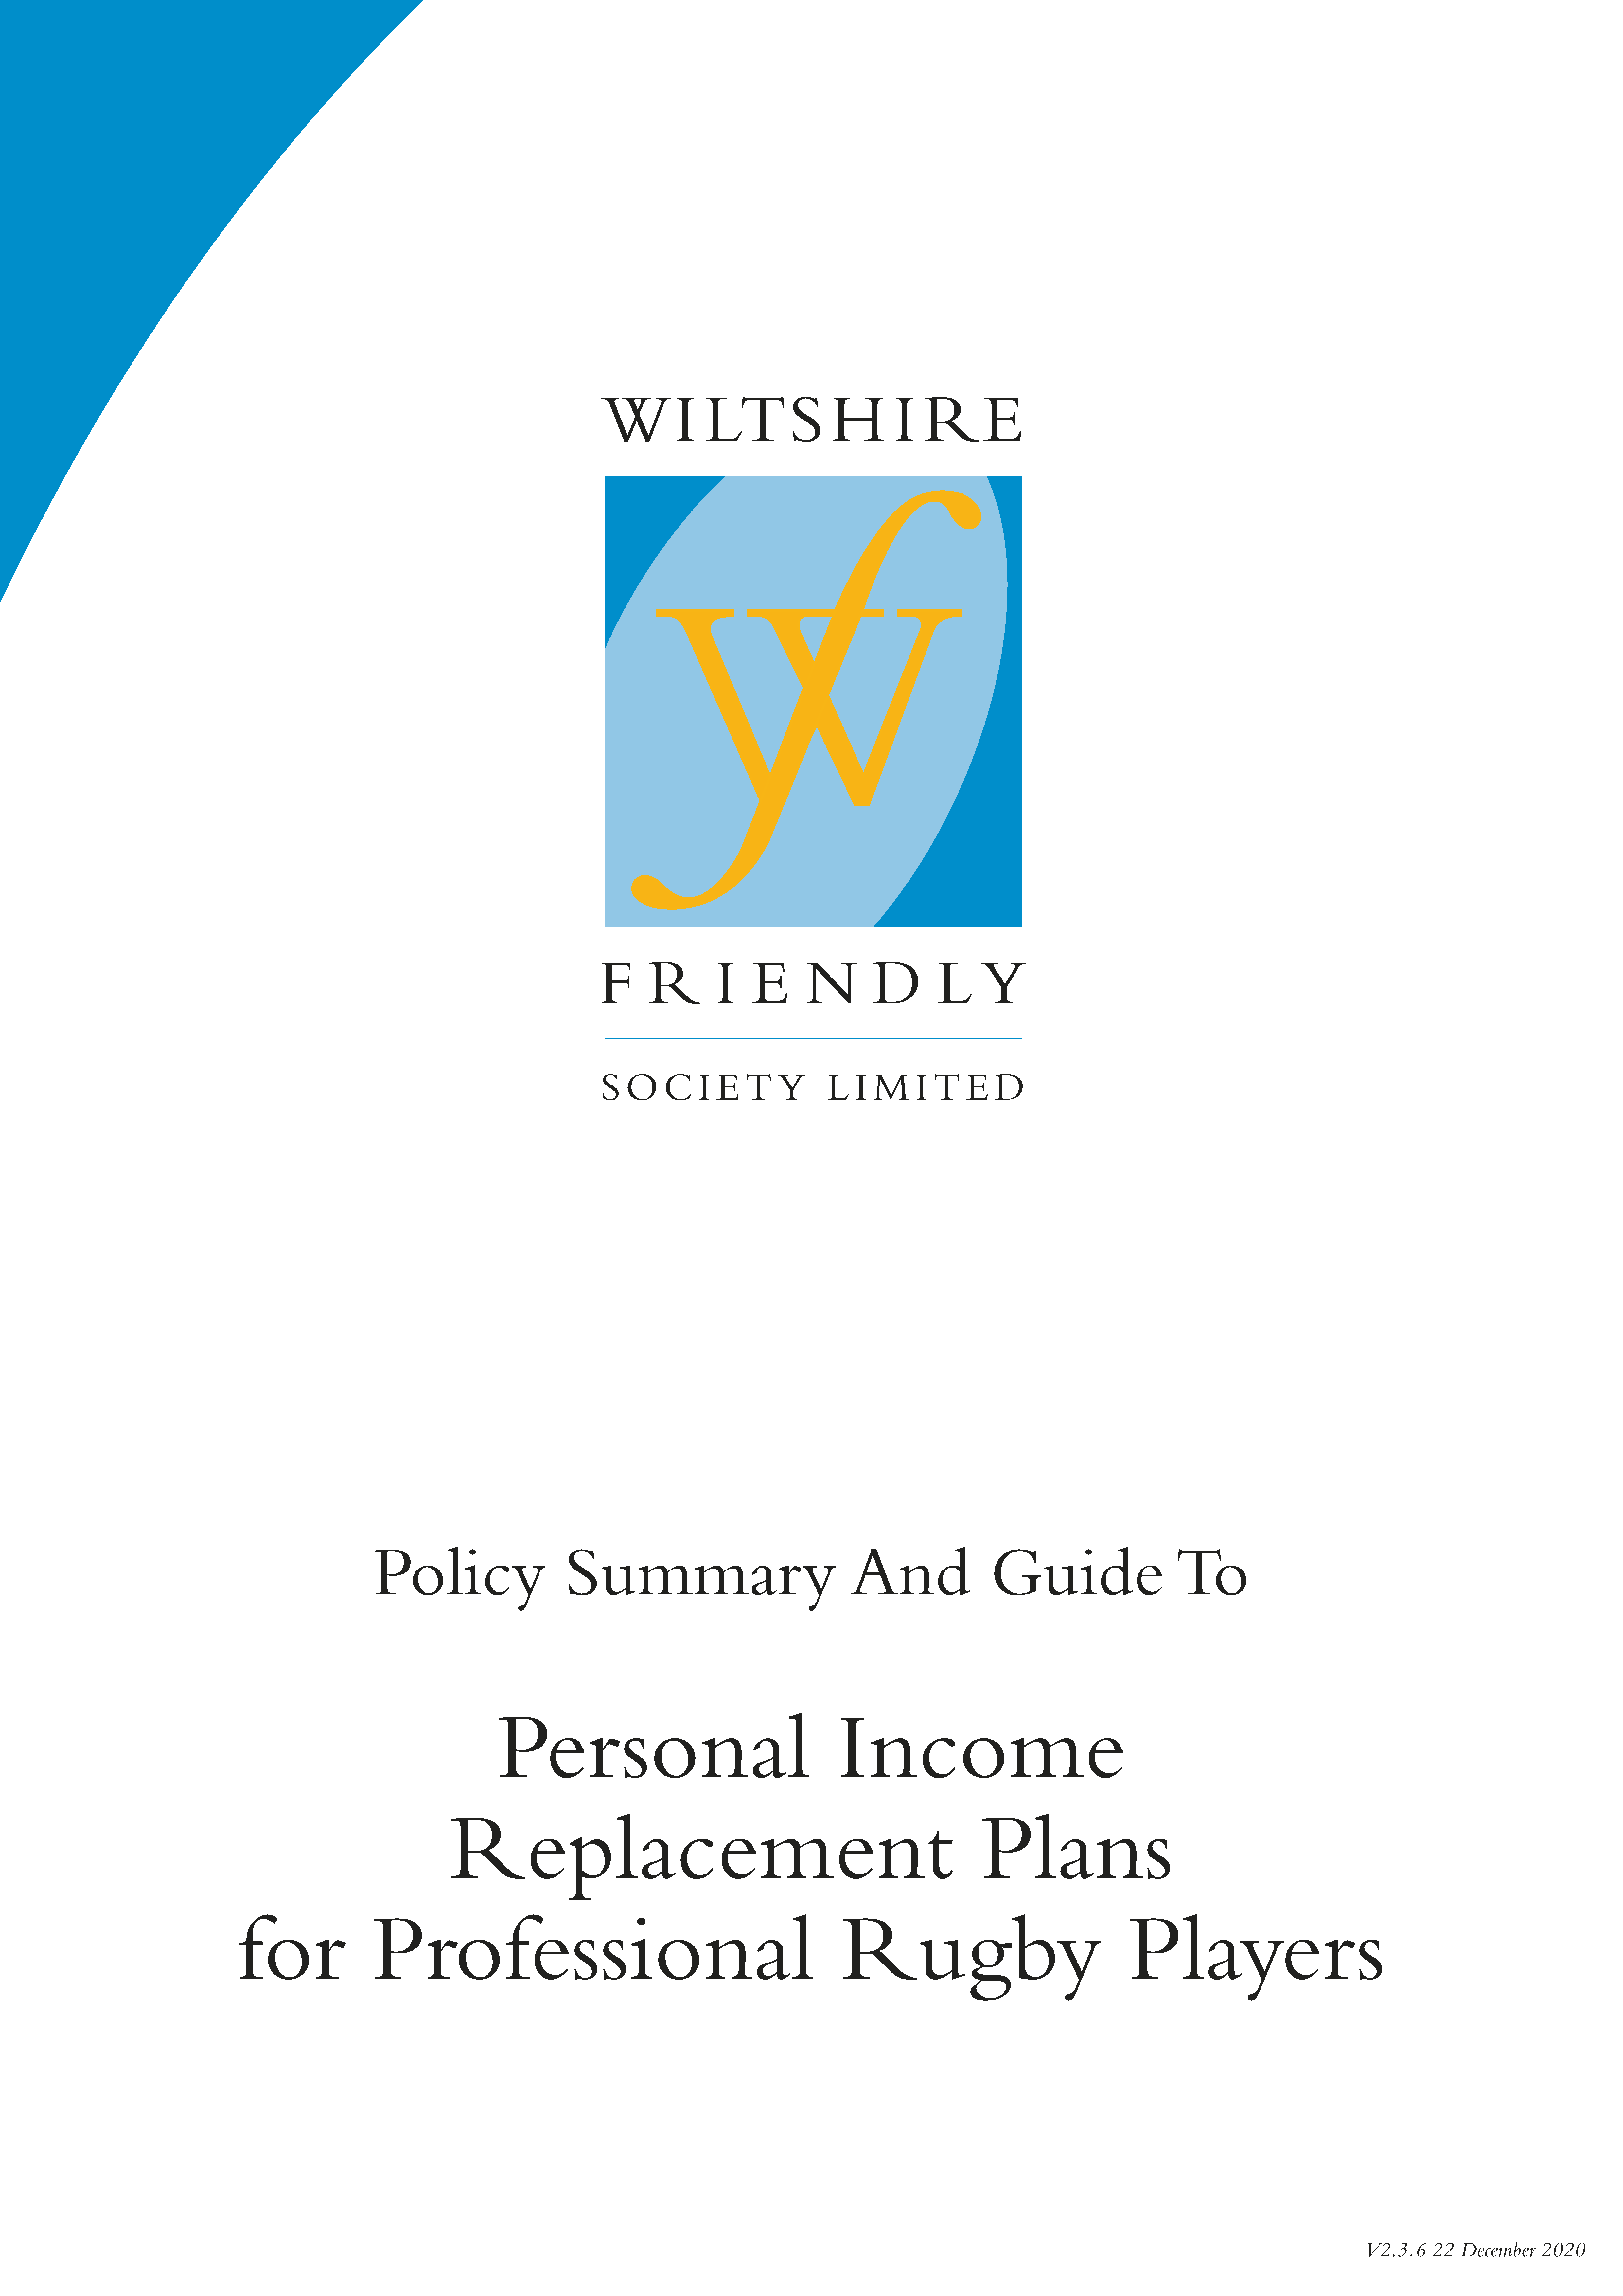 Standard Plan Policy Summary